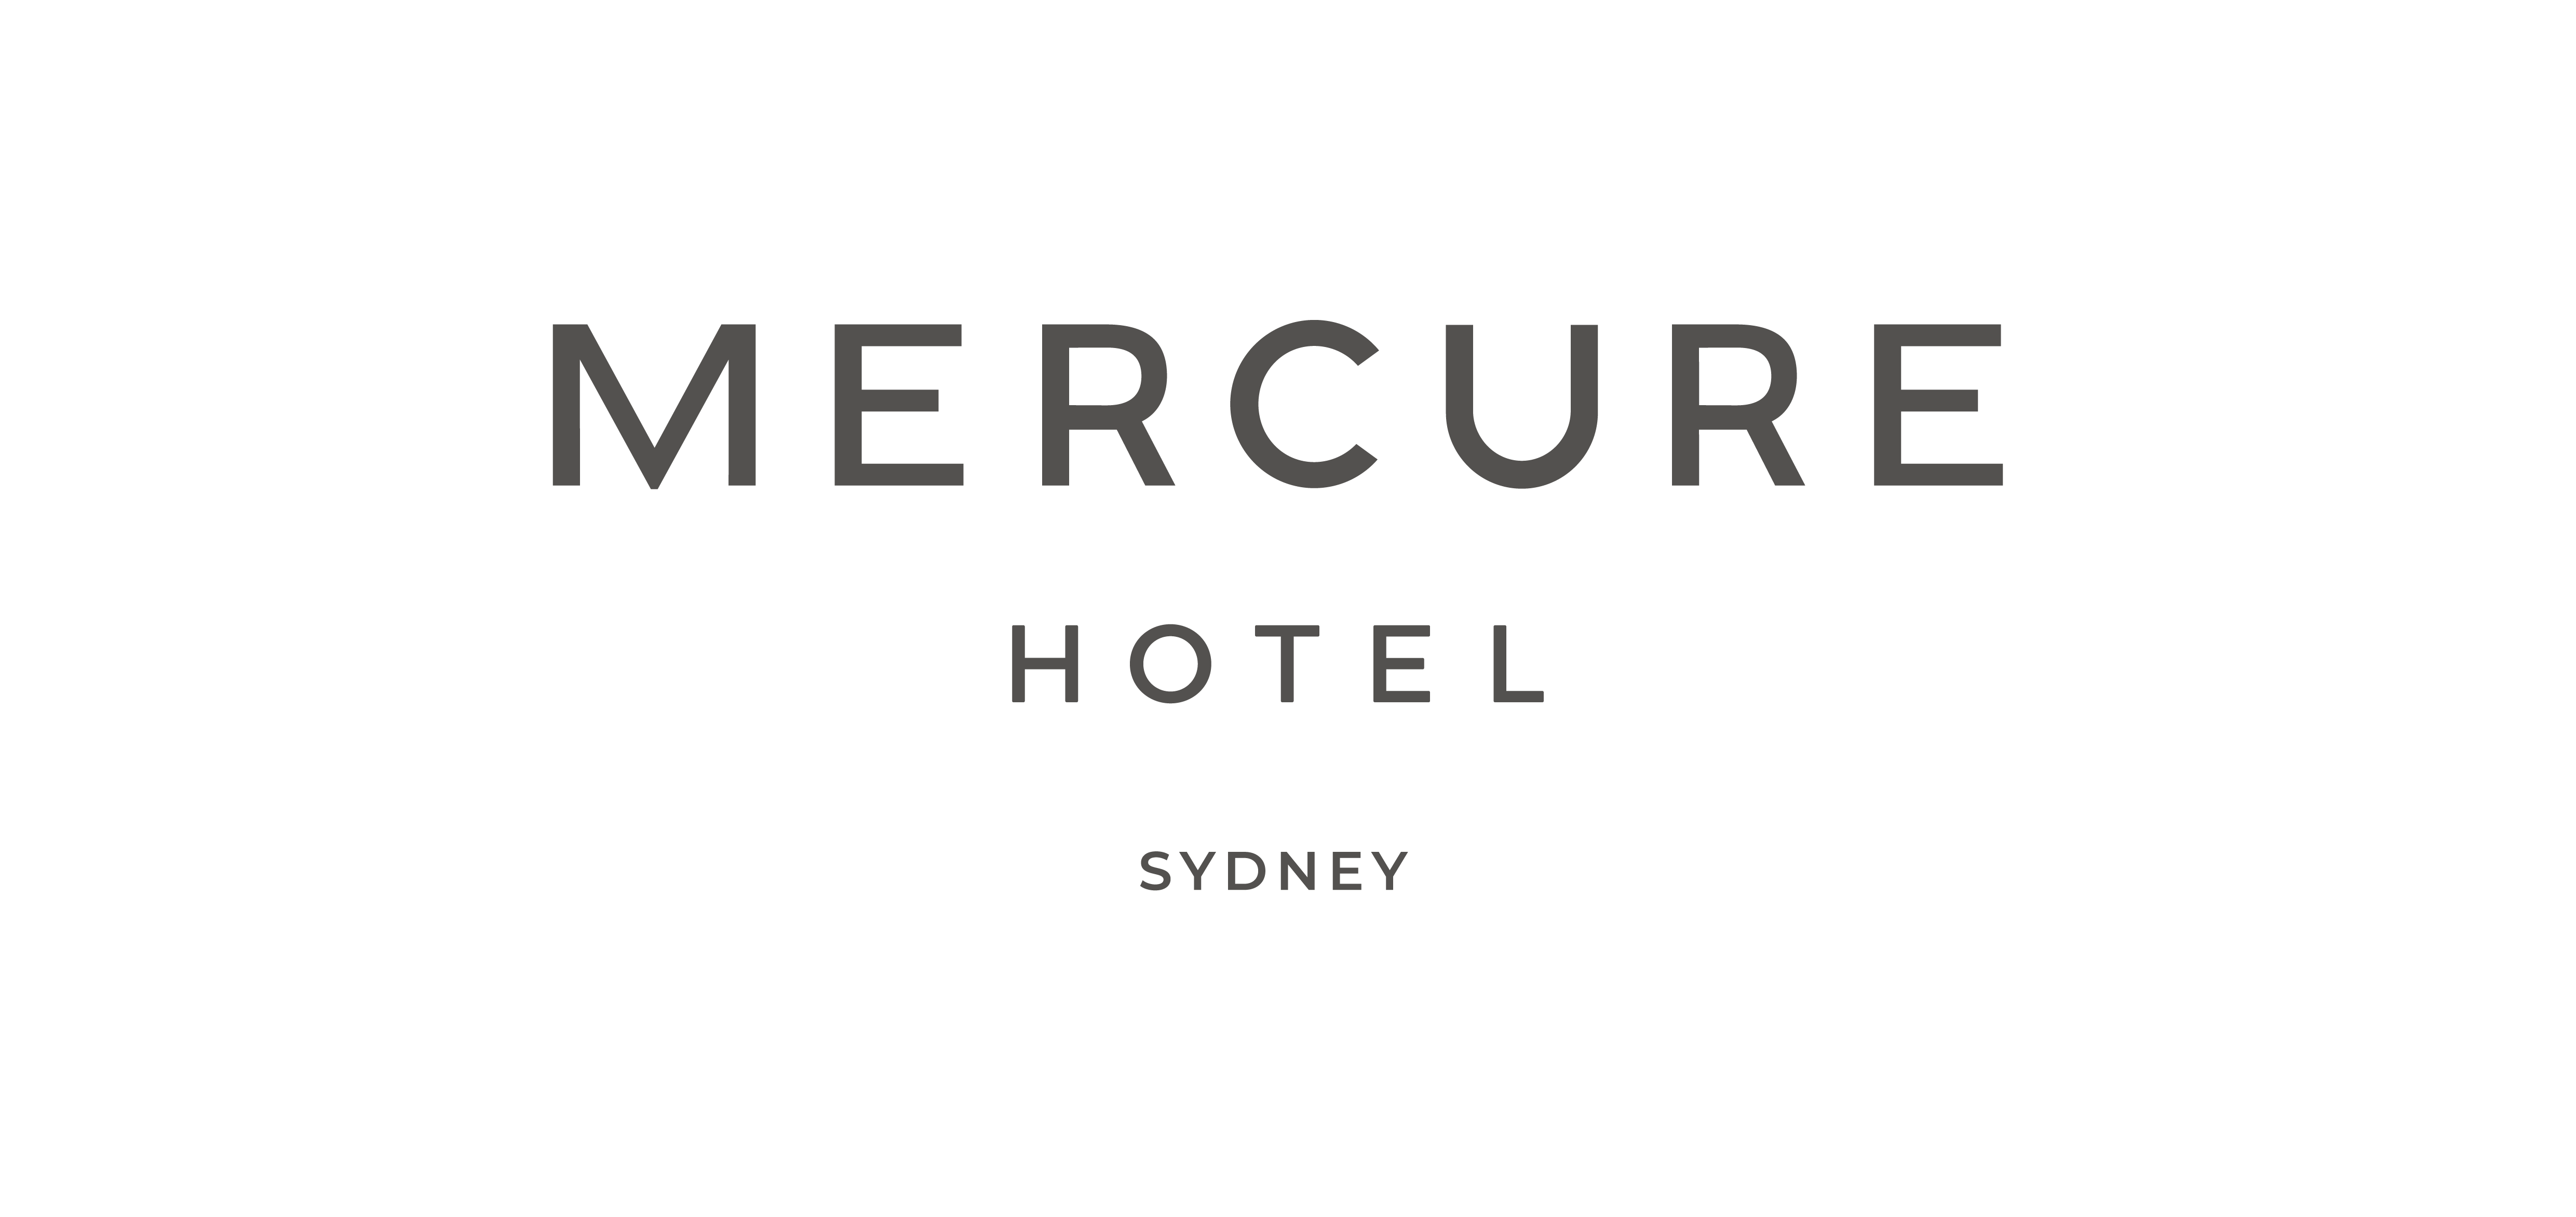 Mercure Sydney logo